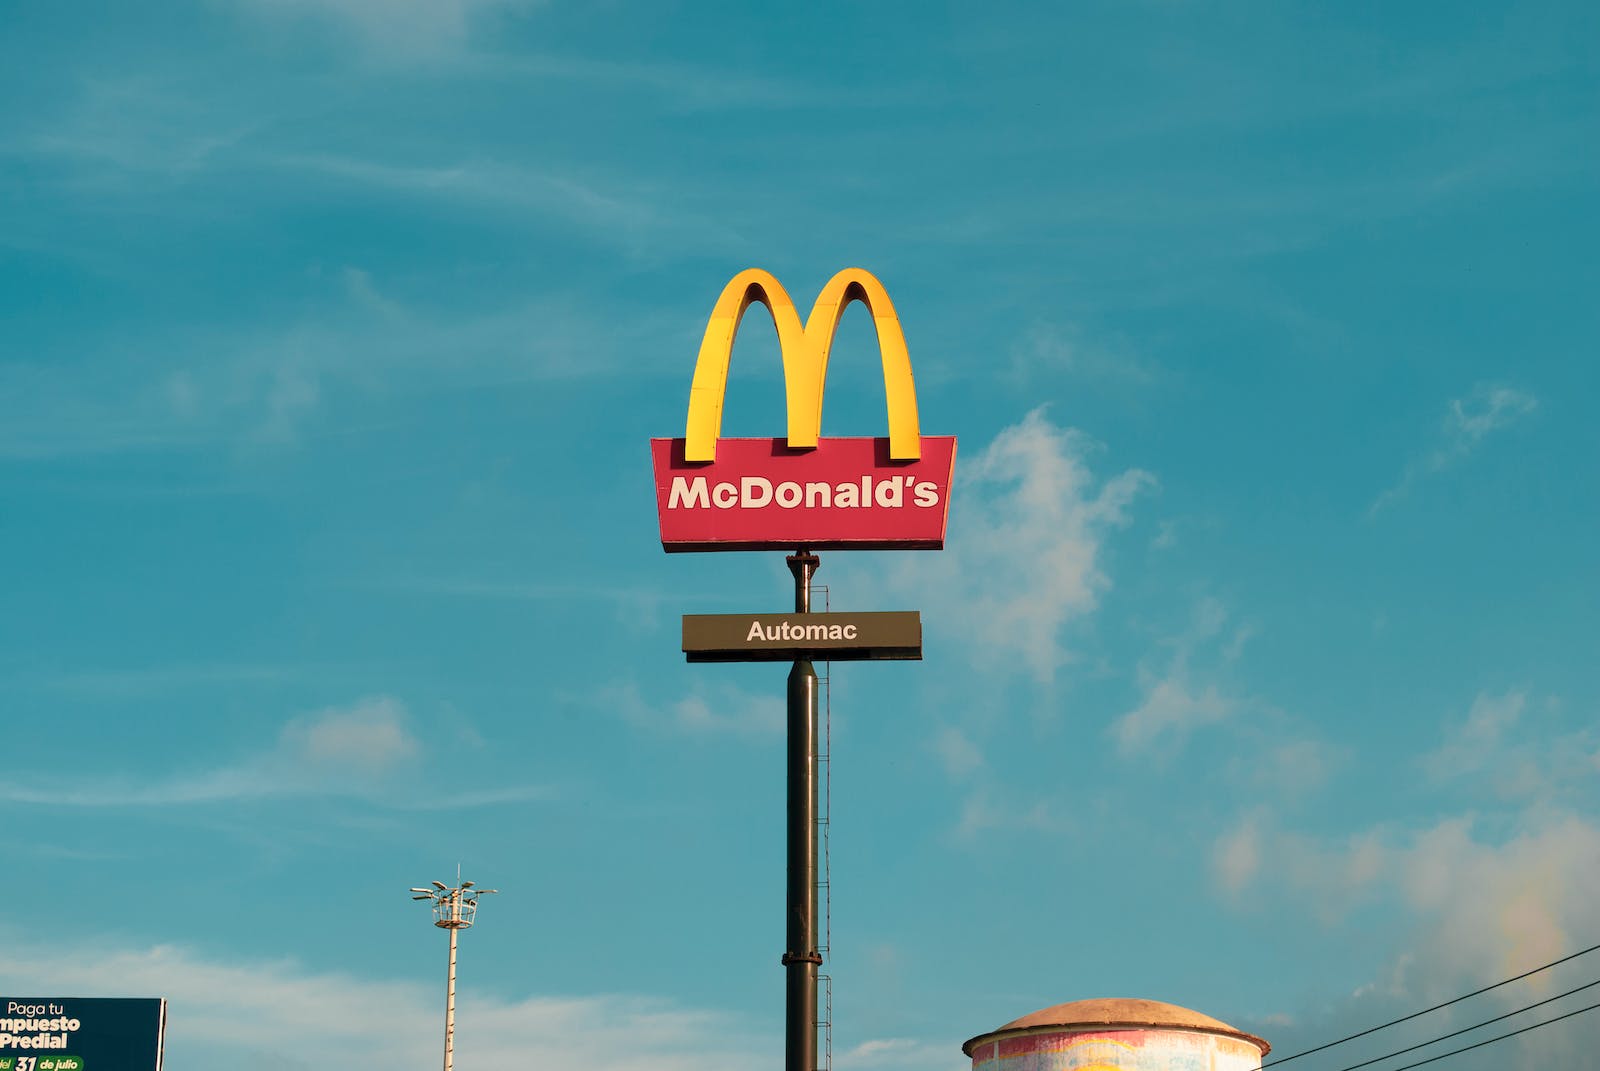 Blue Sky over a McDonald's Sign